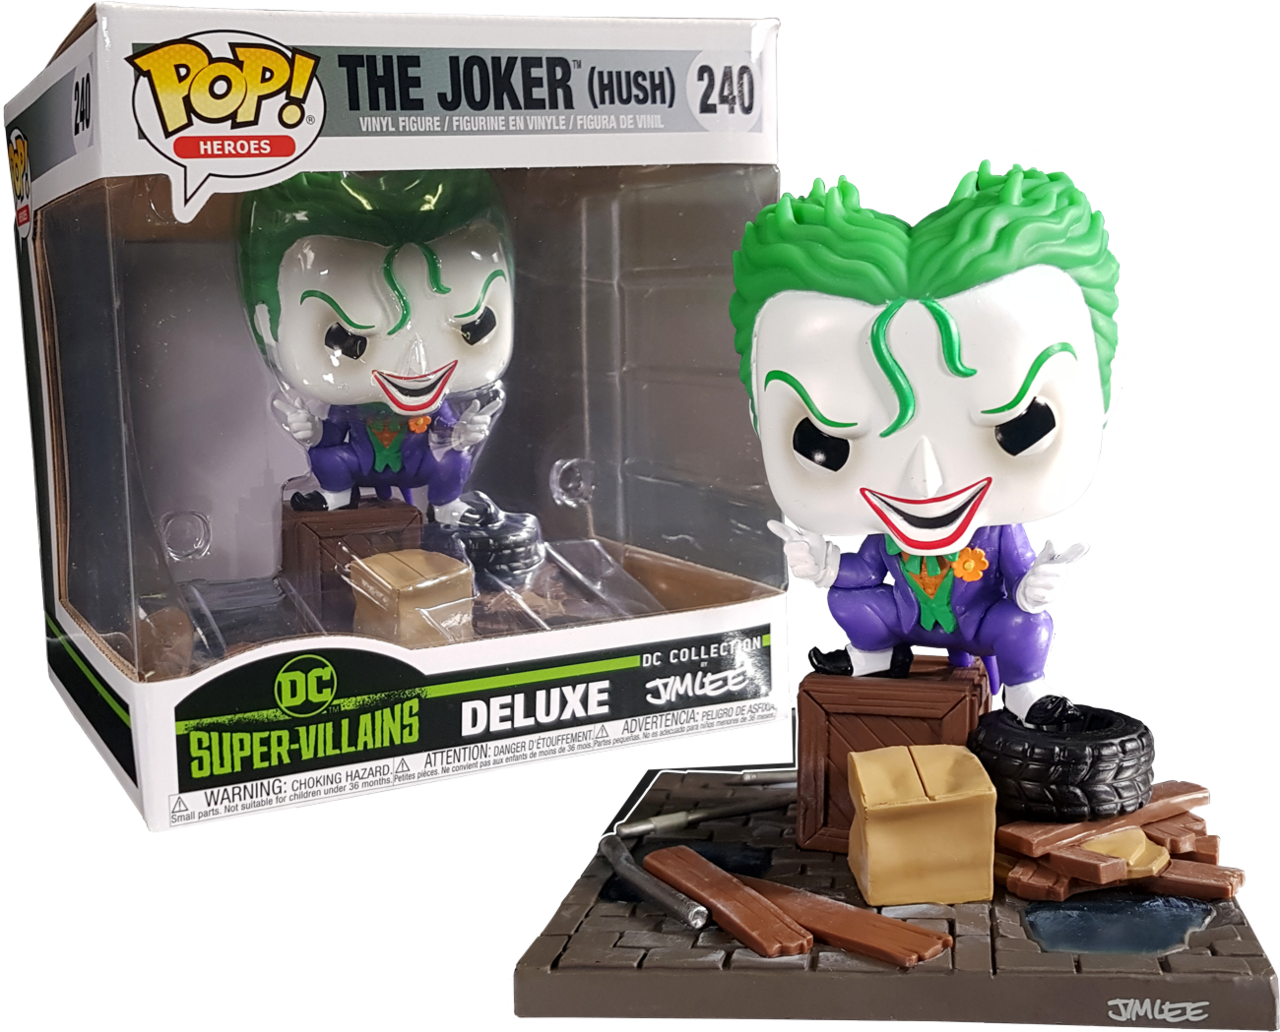 WORST: Hush Joker (240)